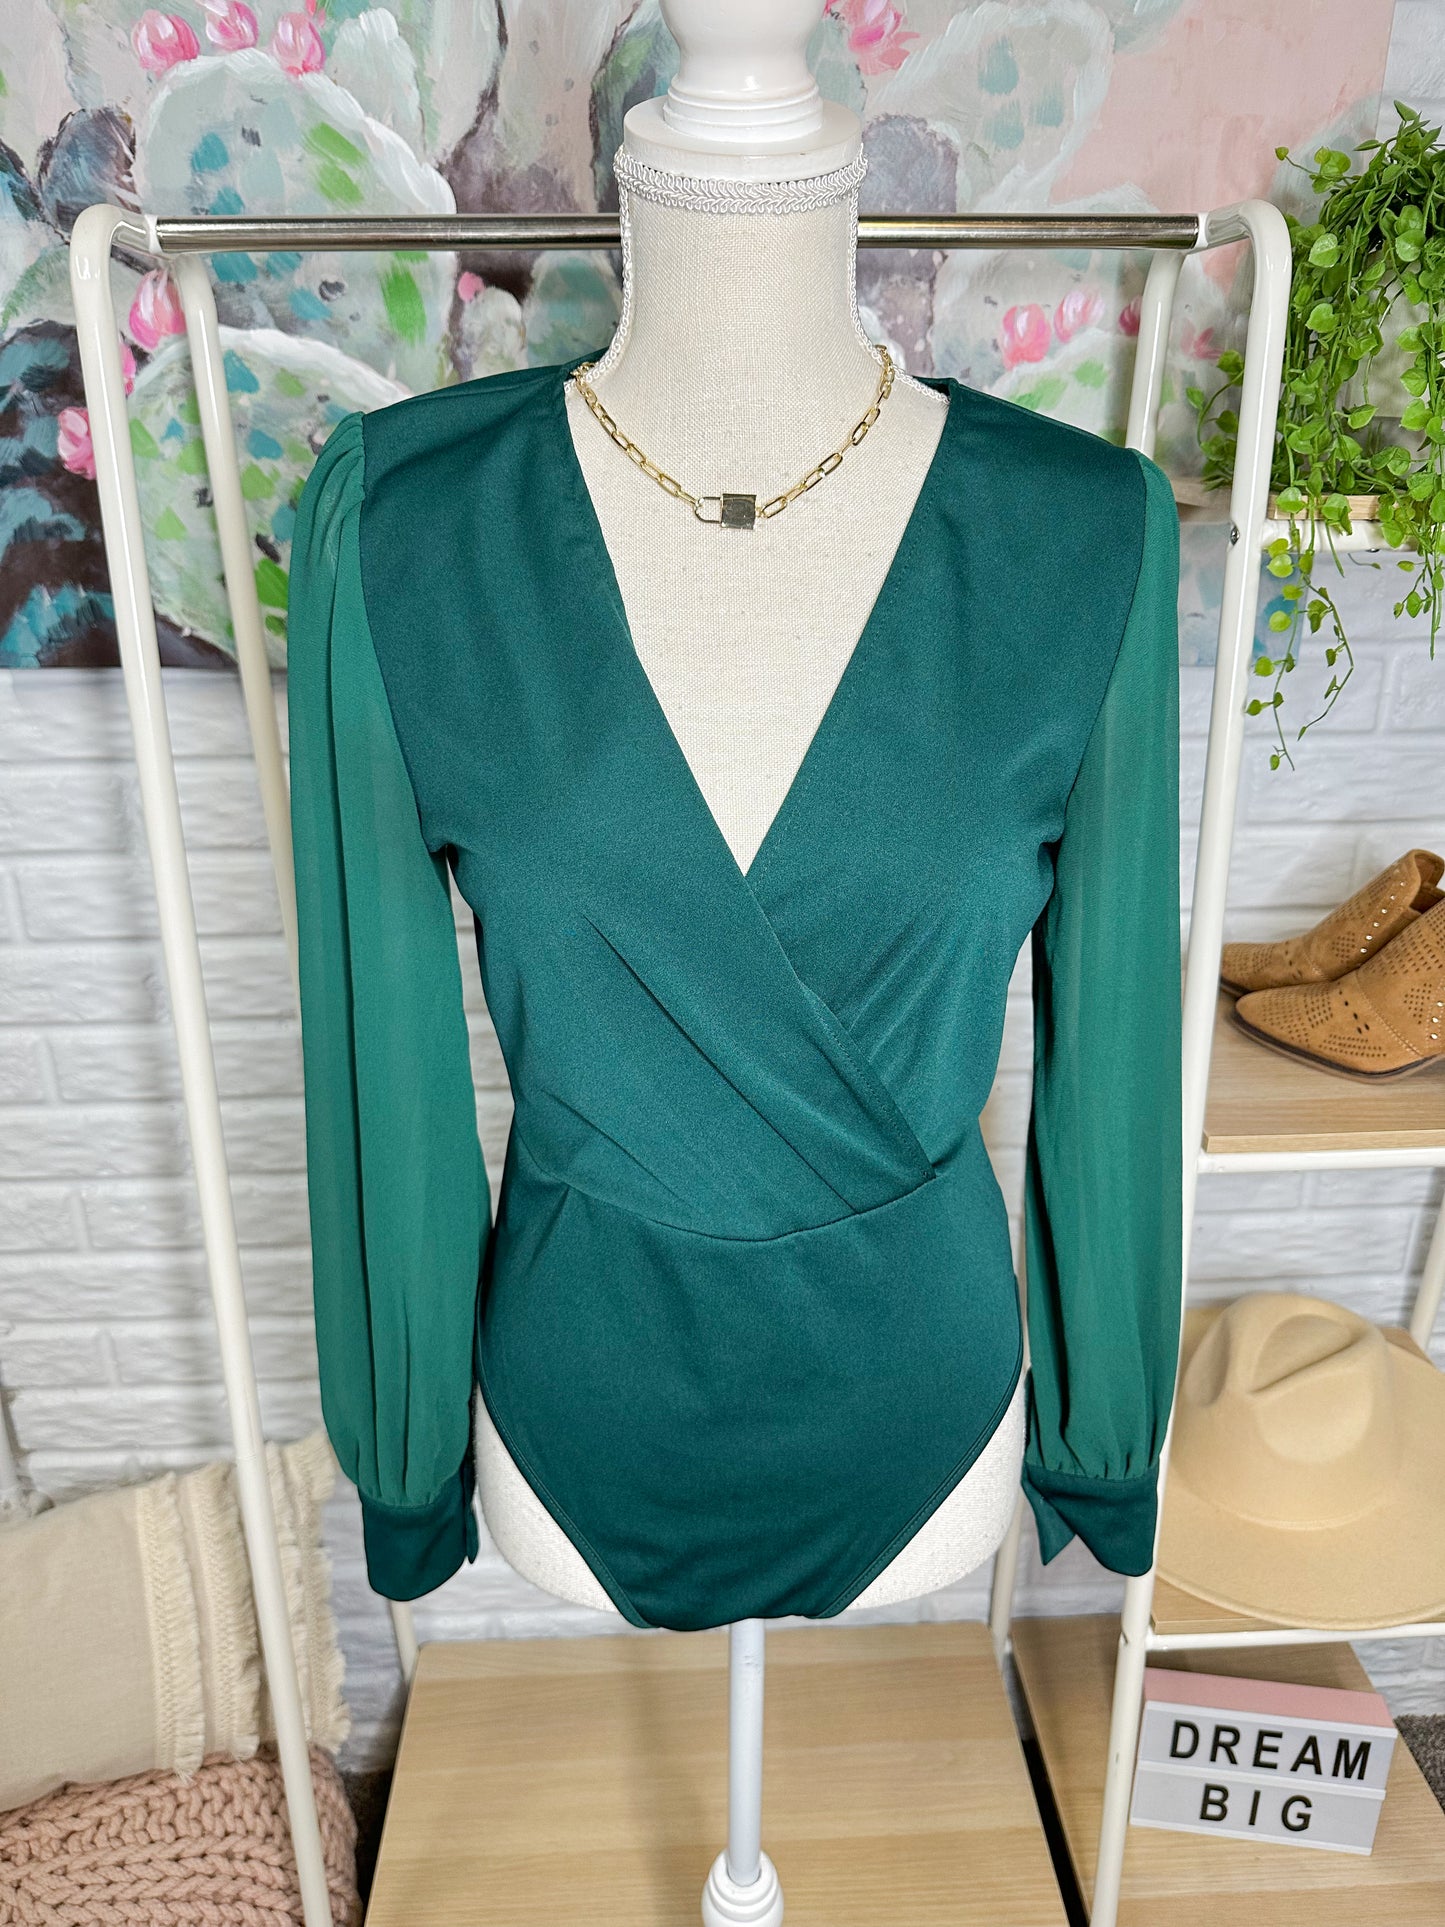 Wdirara Green Long Sleeve Bodysuit Size Large